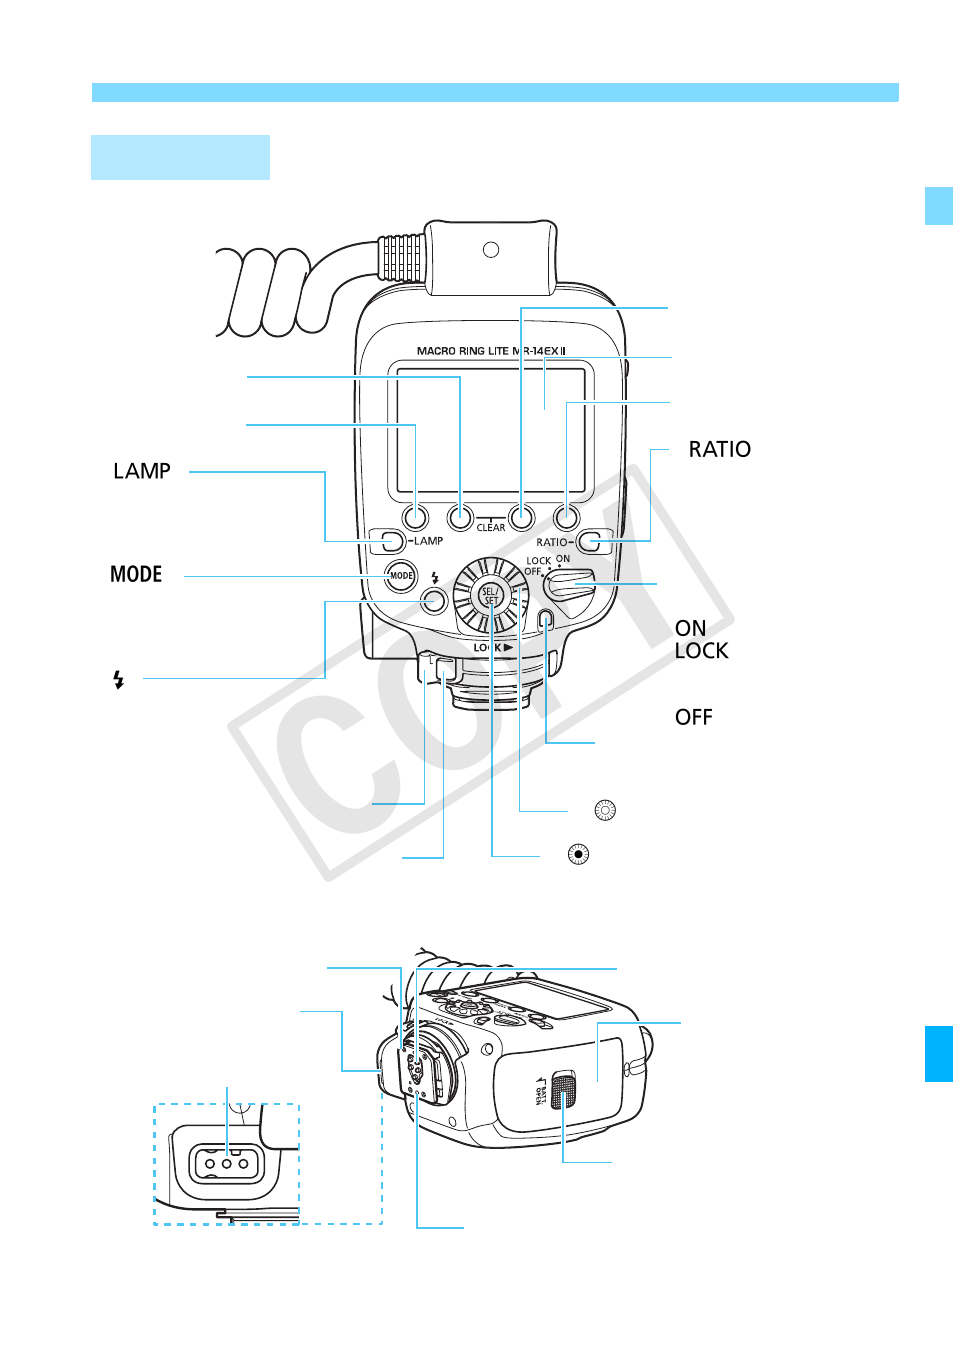 Cop y | Инструкция по эксплуатации Canon Macro Ring Lite | Страница 11 / 340